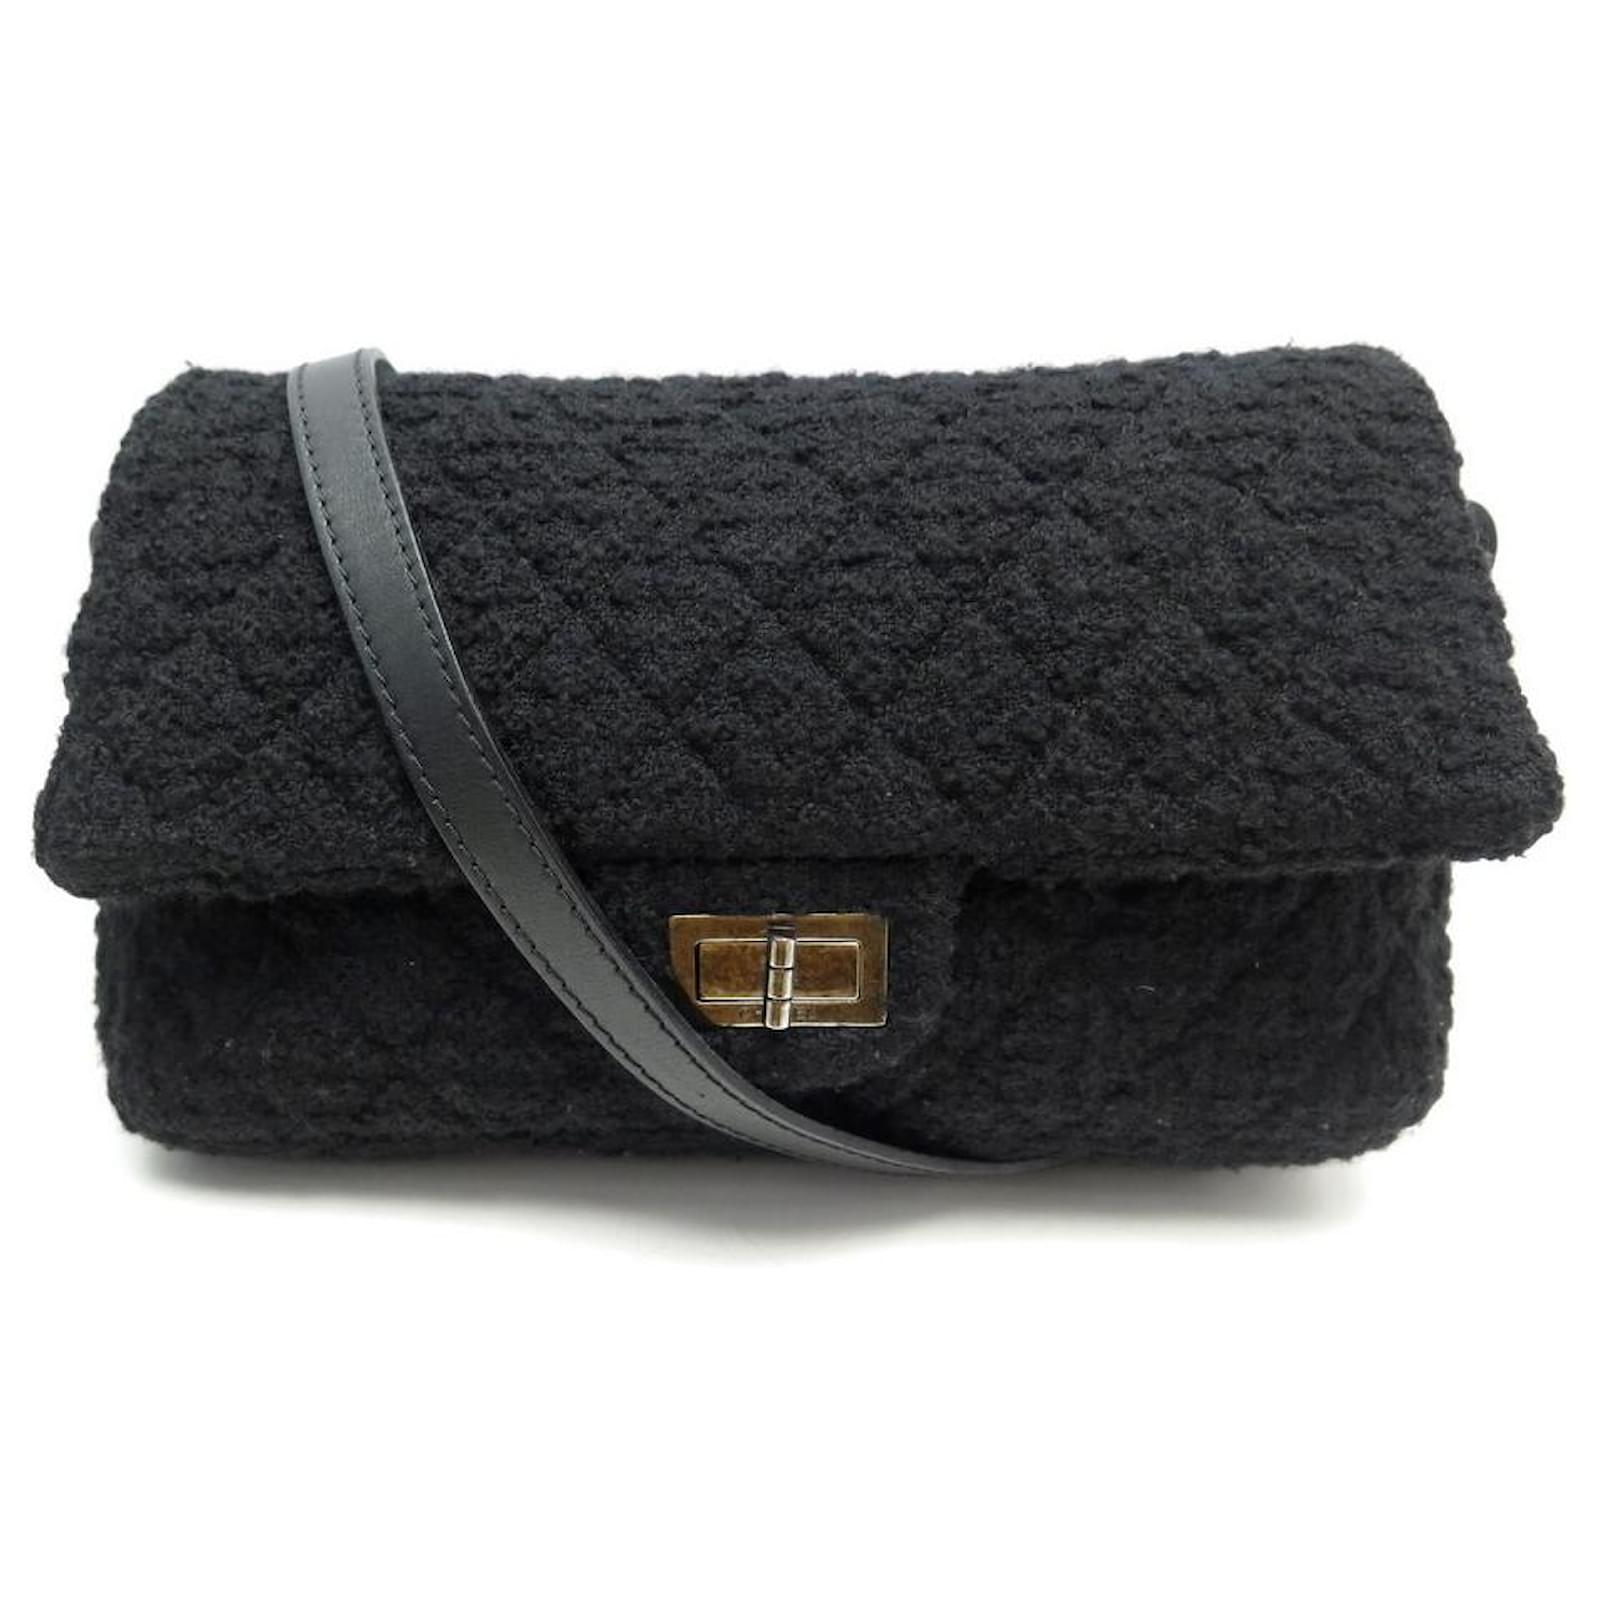 Chanel handbag 2.55 LARGE GM BLACK TWEED BANDOULIERE BLACK HANDBAG